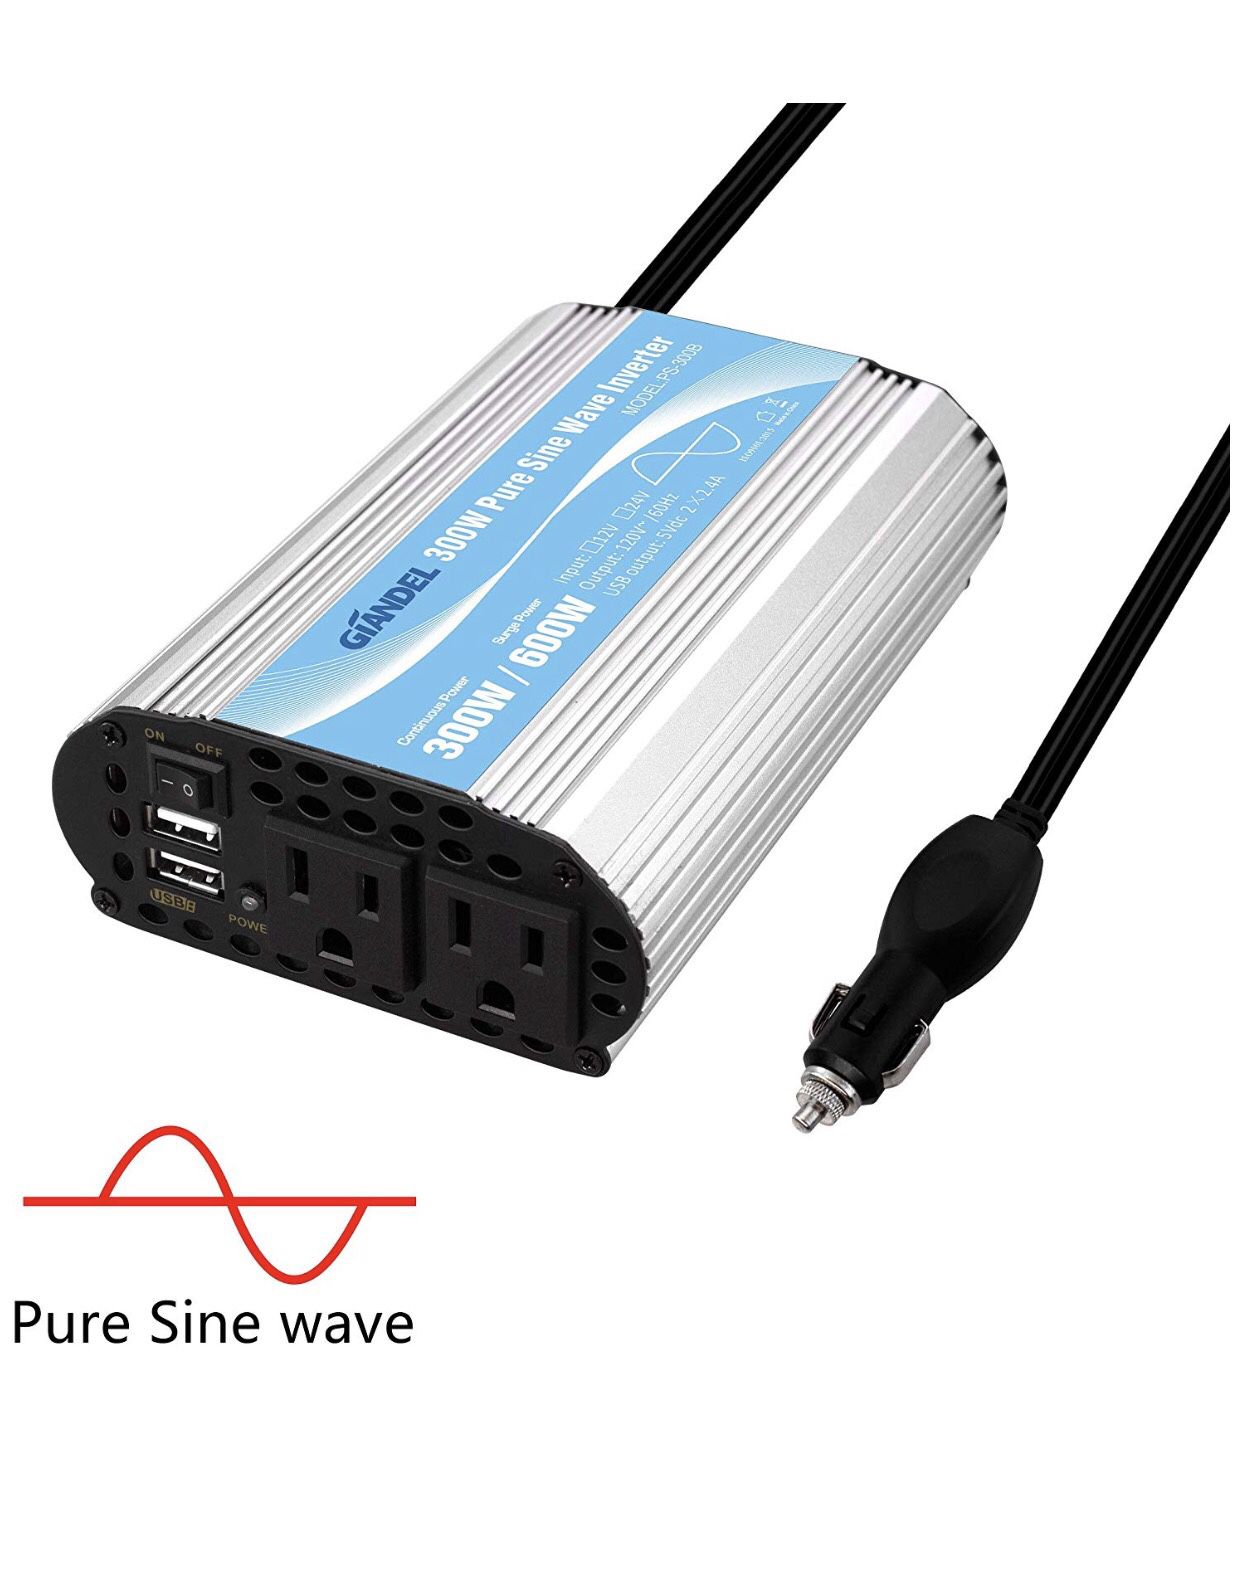 brand new 300Watt Pure Sine Wave Car Power Inverter